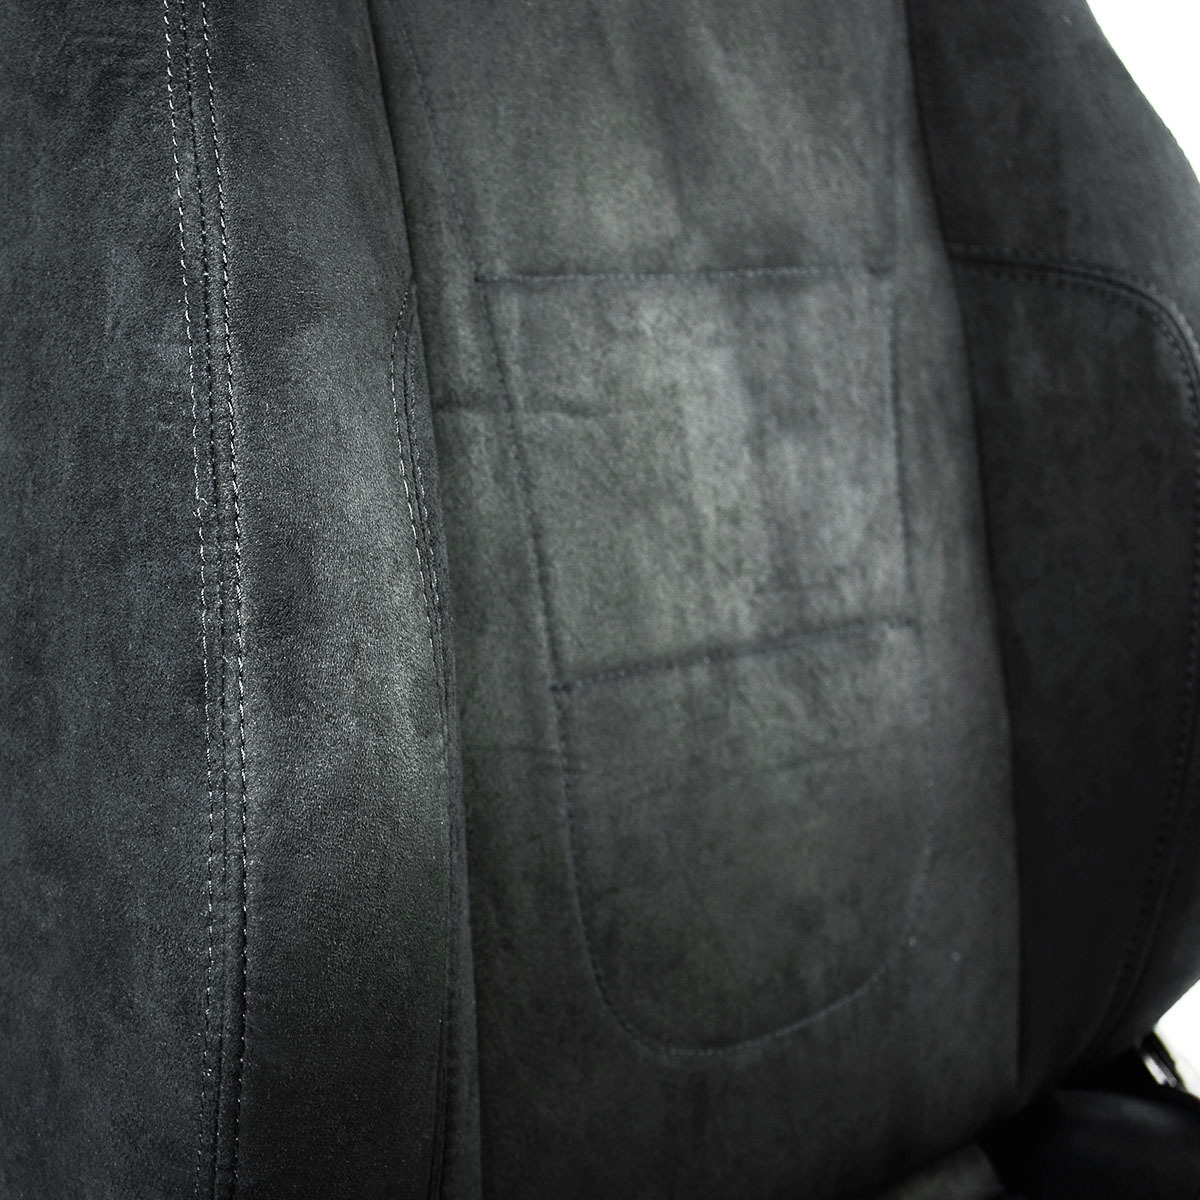 Trax 4x4 Seat Black Water Repellant Cloth ADR Compliant